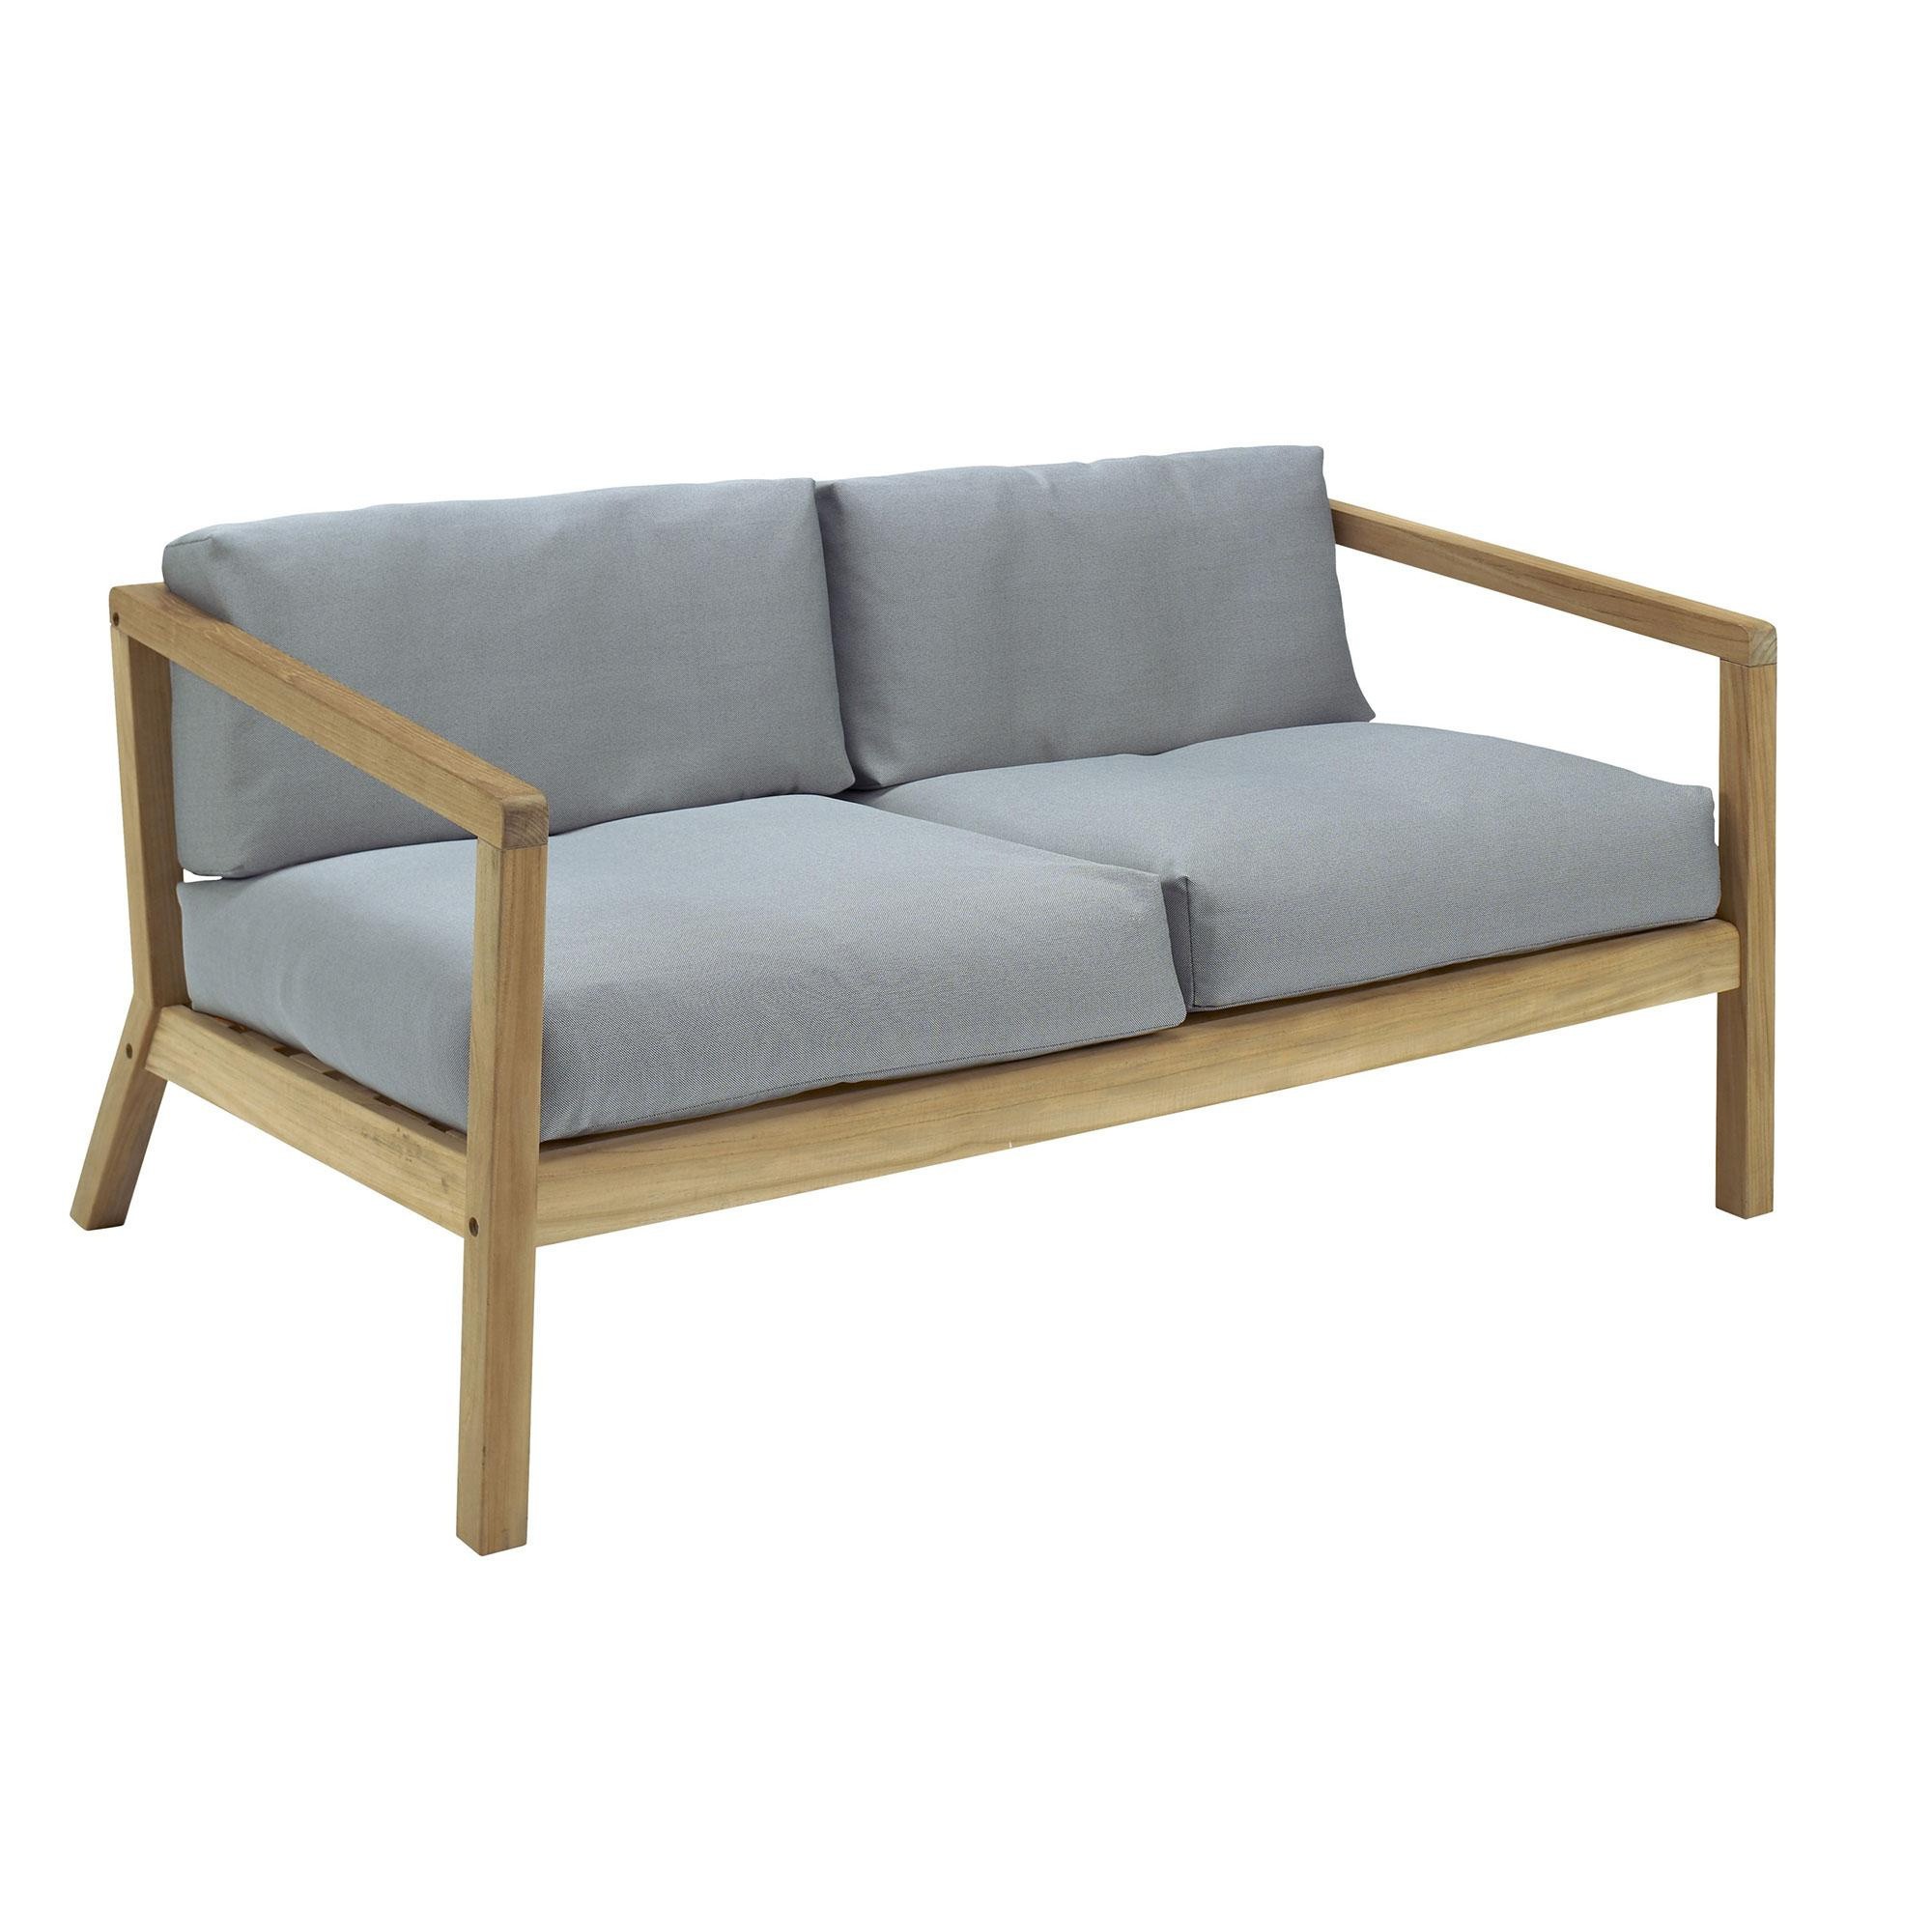 Couch Garten Frisch Virkelyst Outdoor 2 Seater sofa